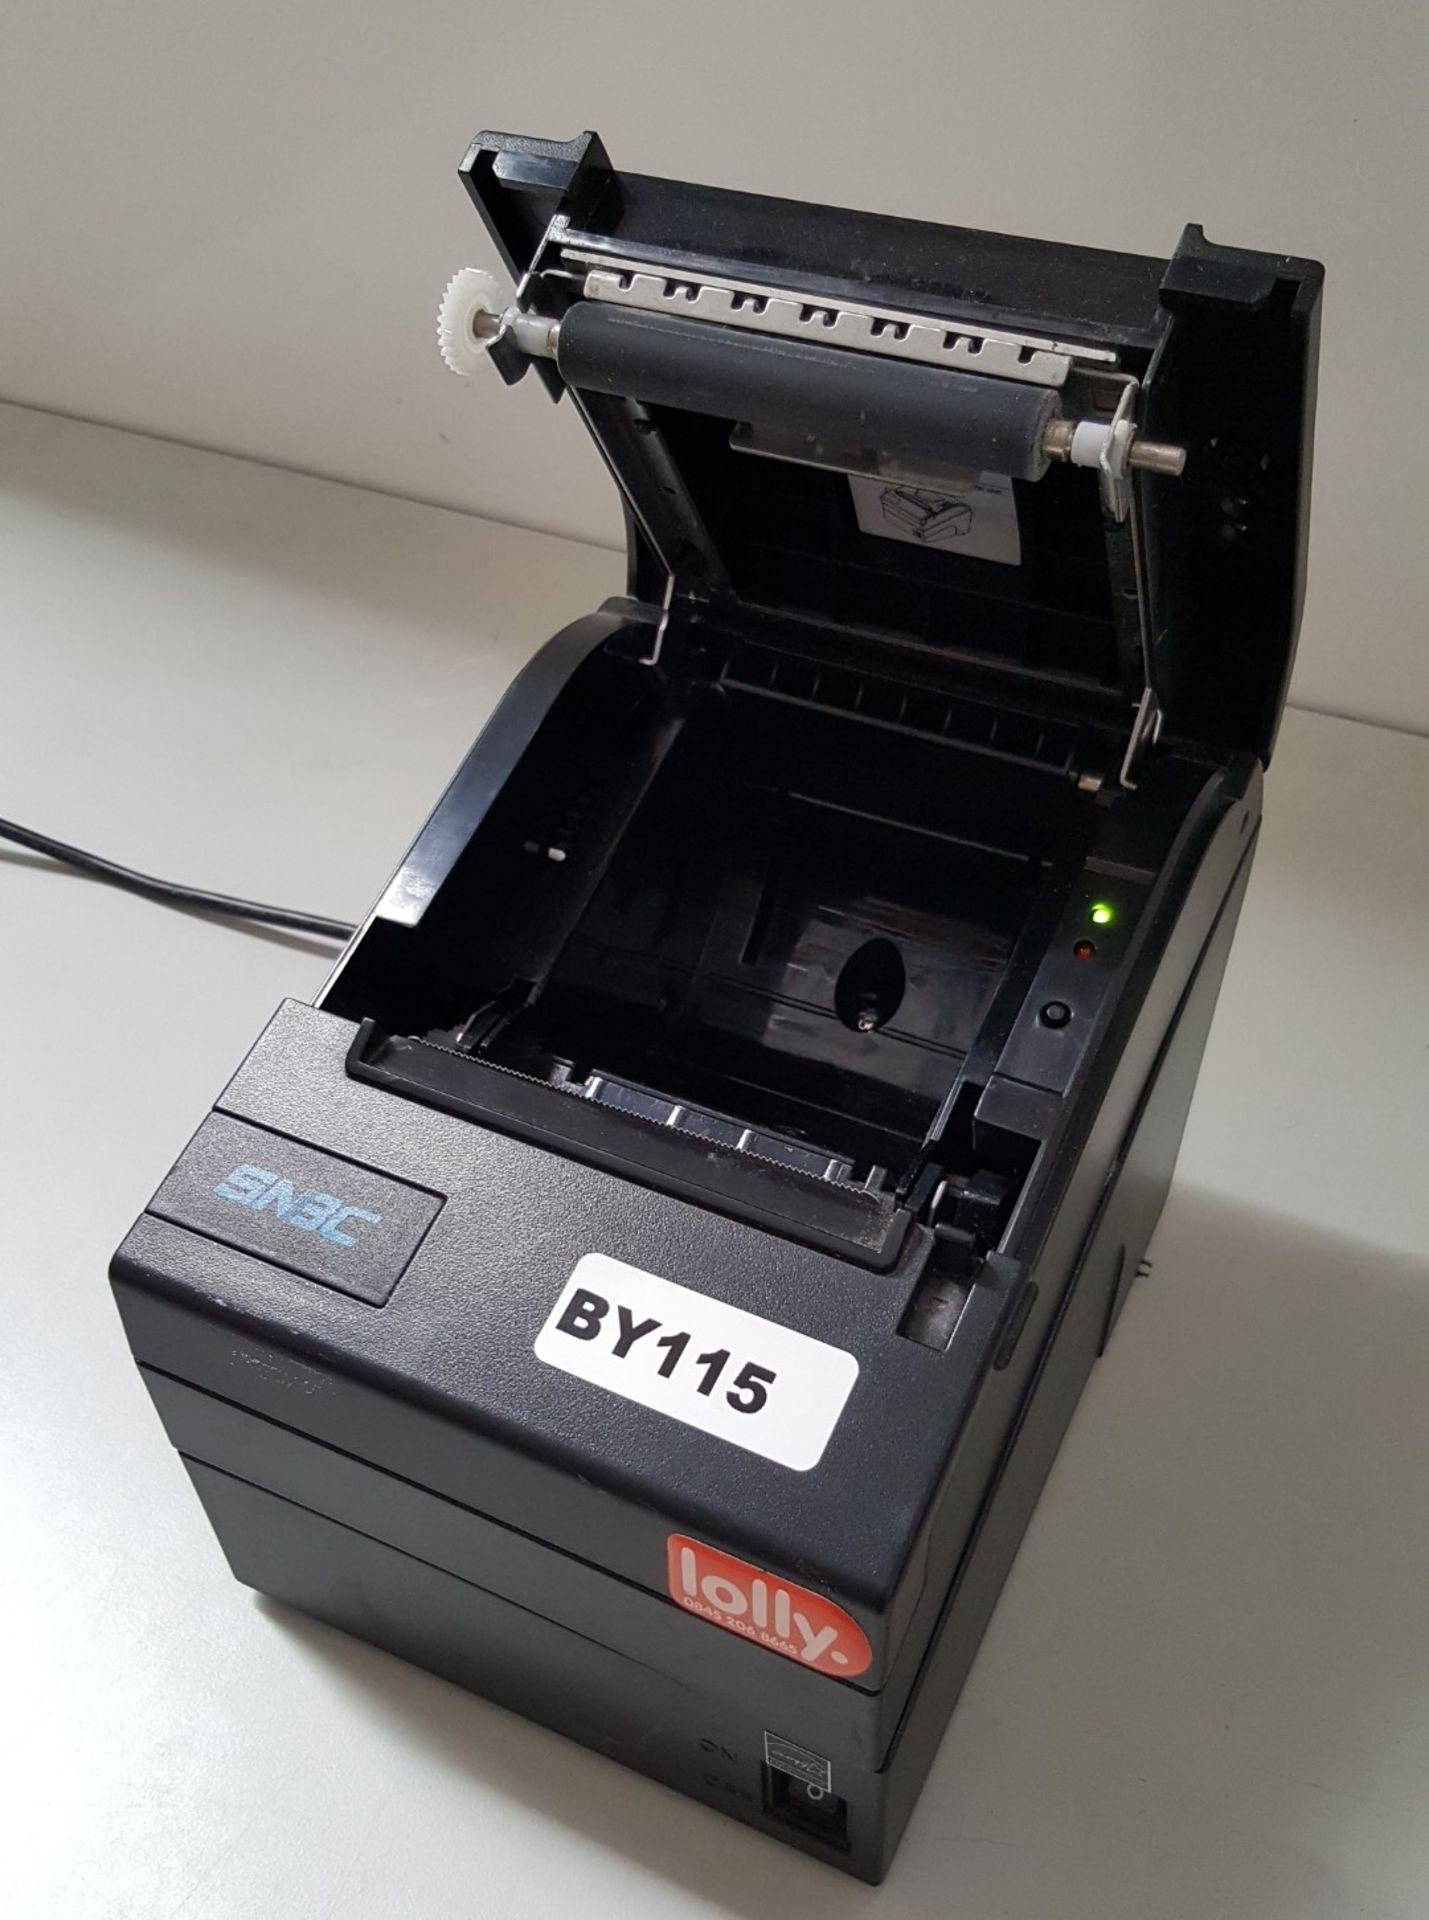 1 x SNBC BTP-R880NP USB Thermal Receipt Printer - Ref BY115 AC3 - Image 2 of 5